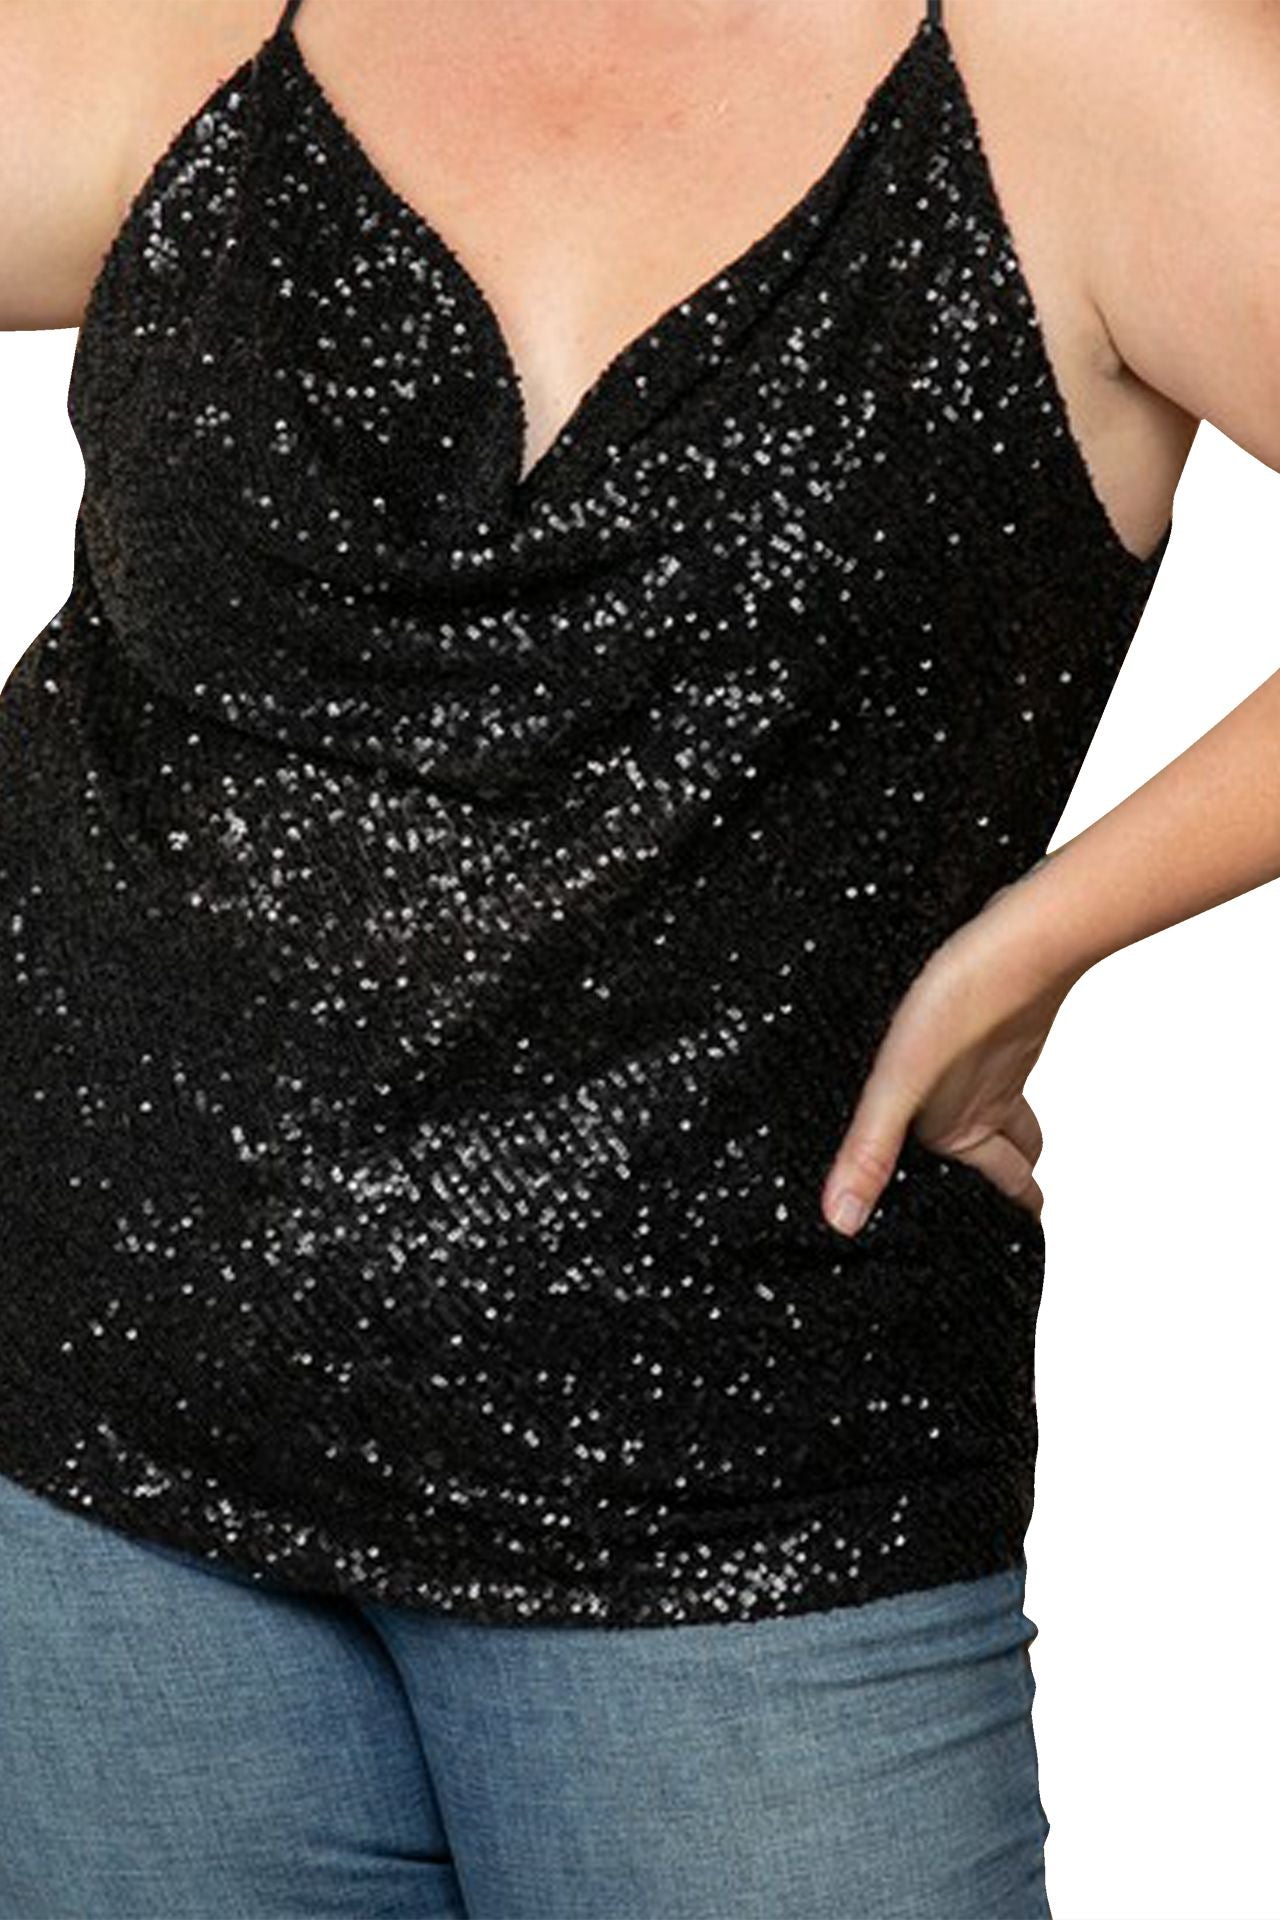 "Kyle X Shahida" "sequin tops for women" "plus size sequin tops evening wear" "sequin cami top" "shimmer top womens"